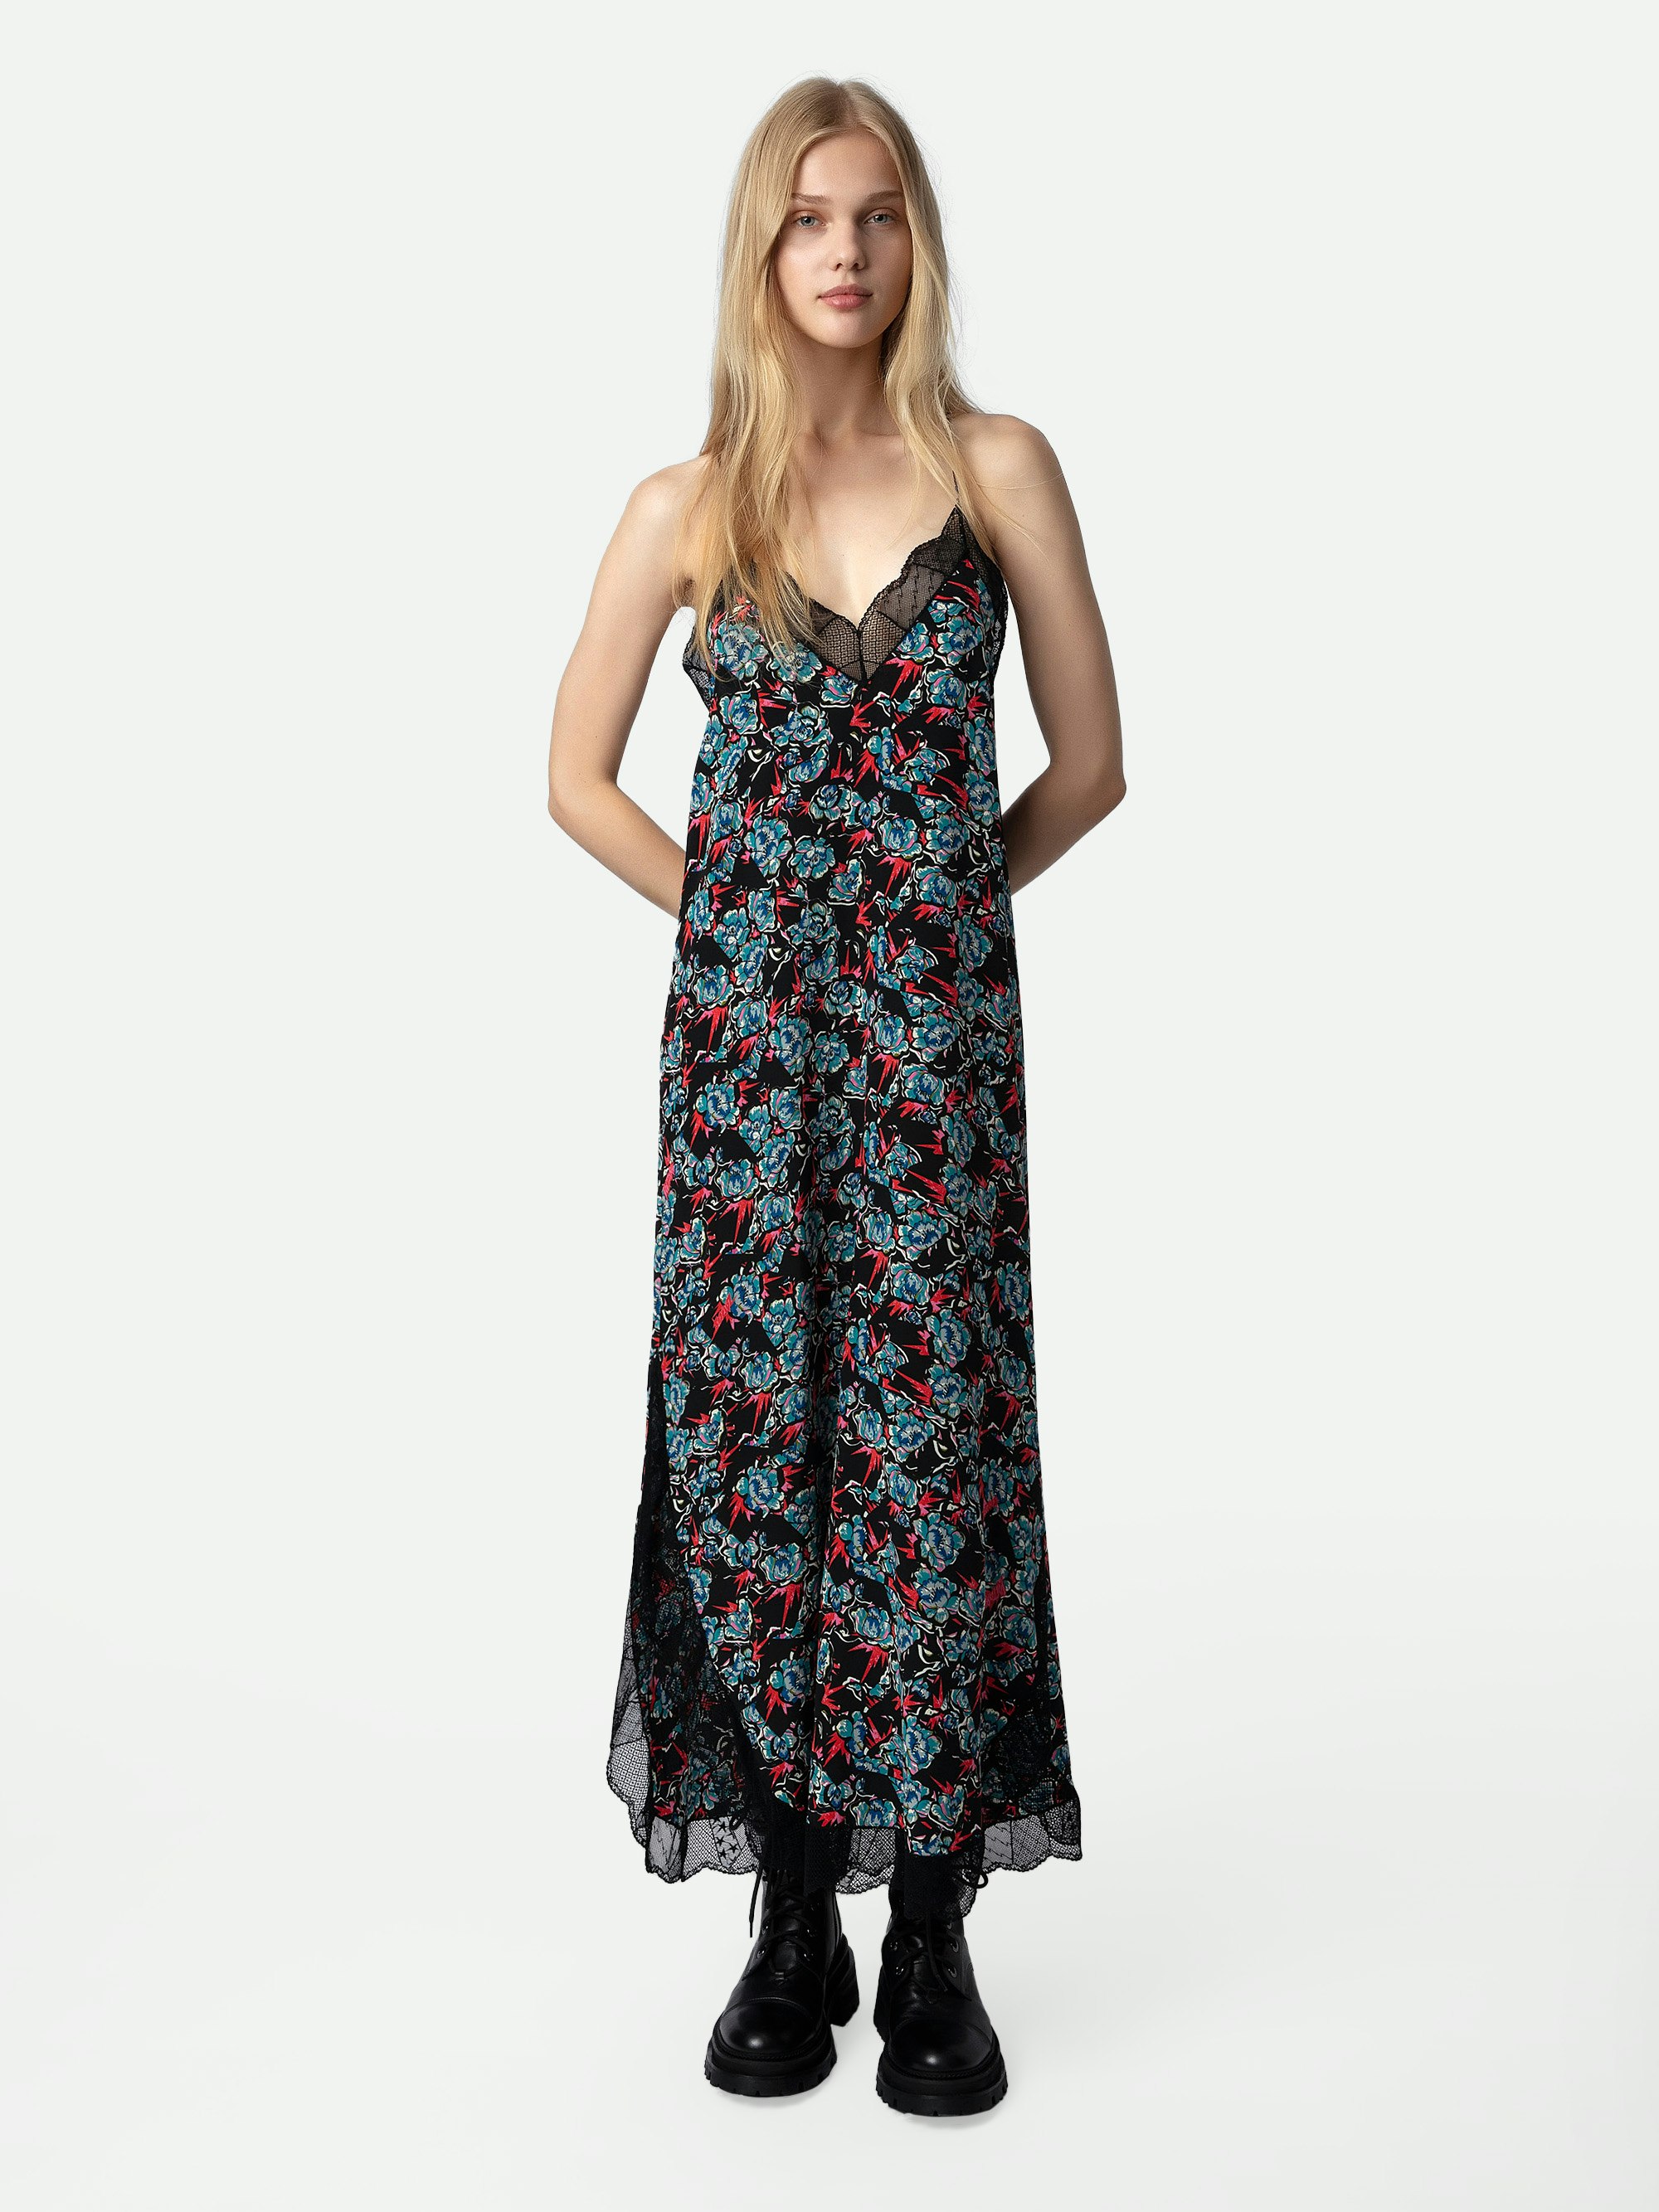 Ristyl Silk Dress - Women’s long black floral-print silk dress.